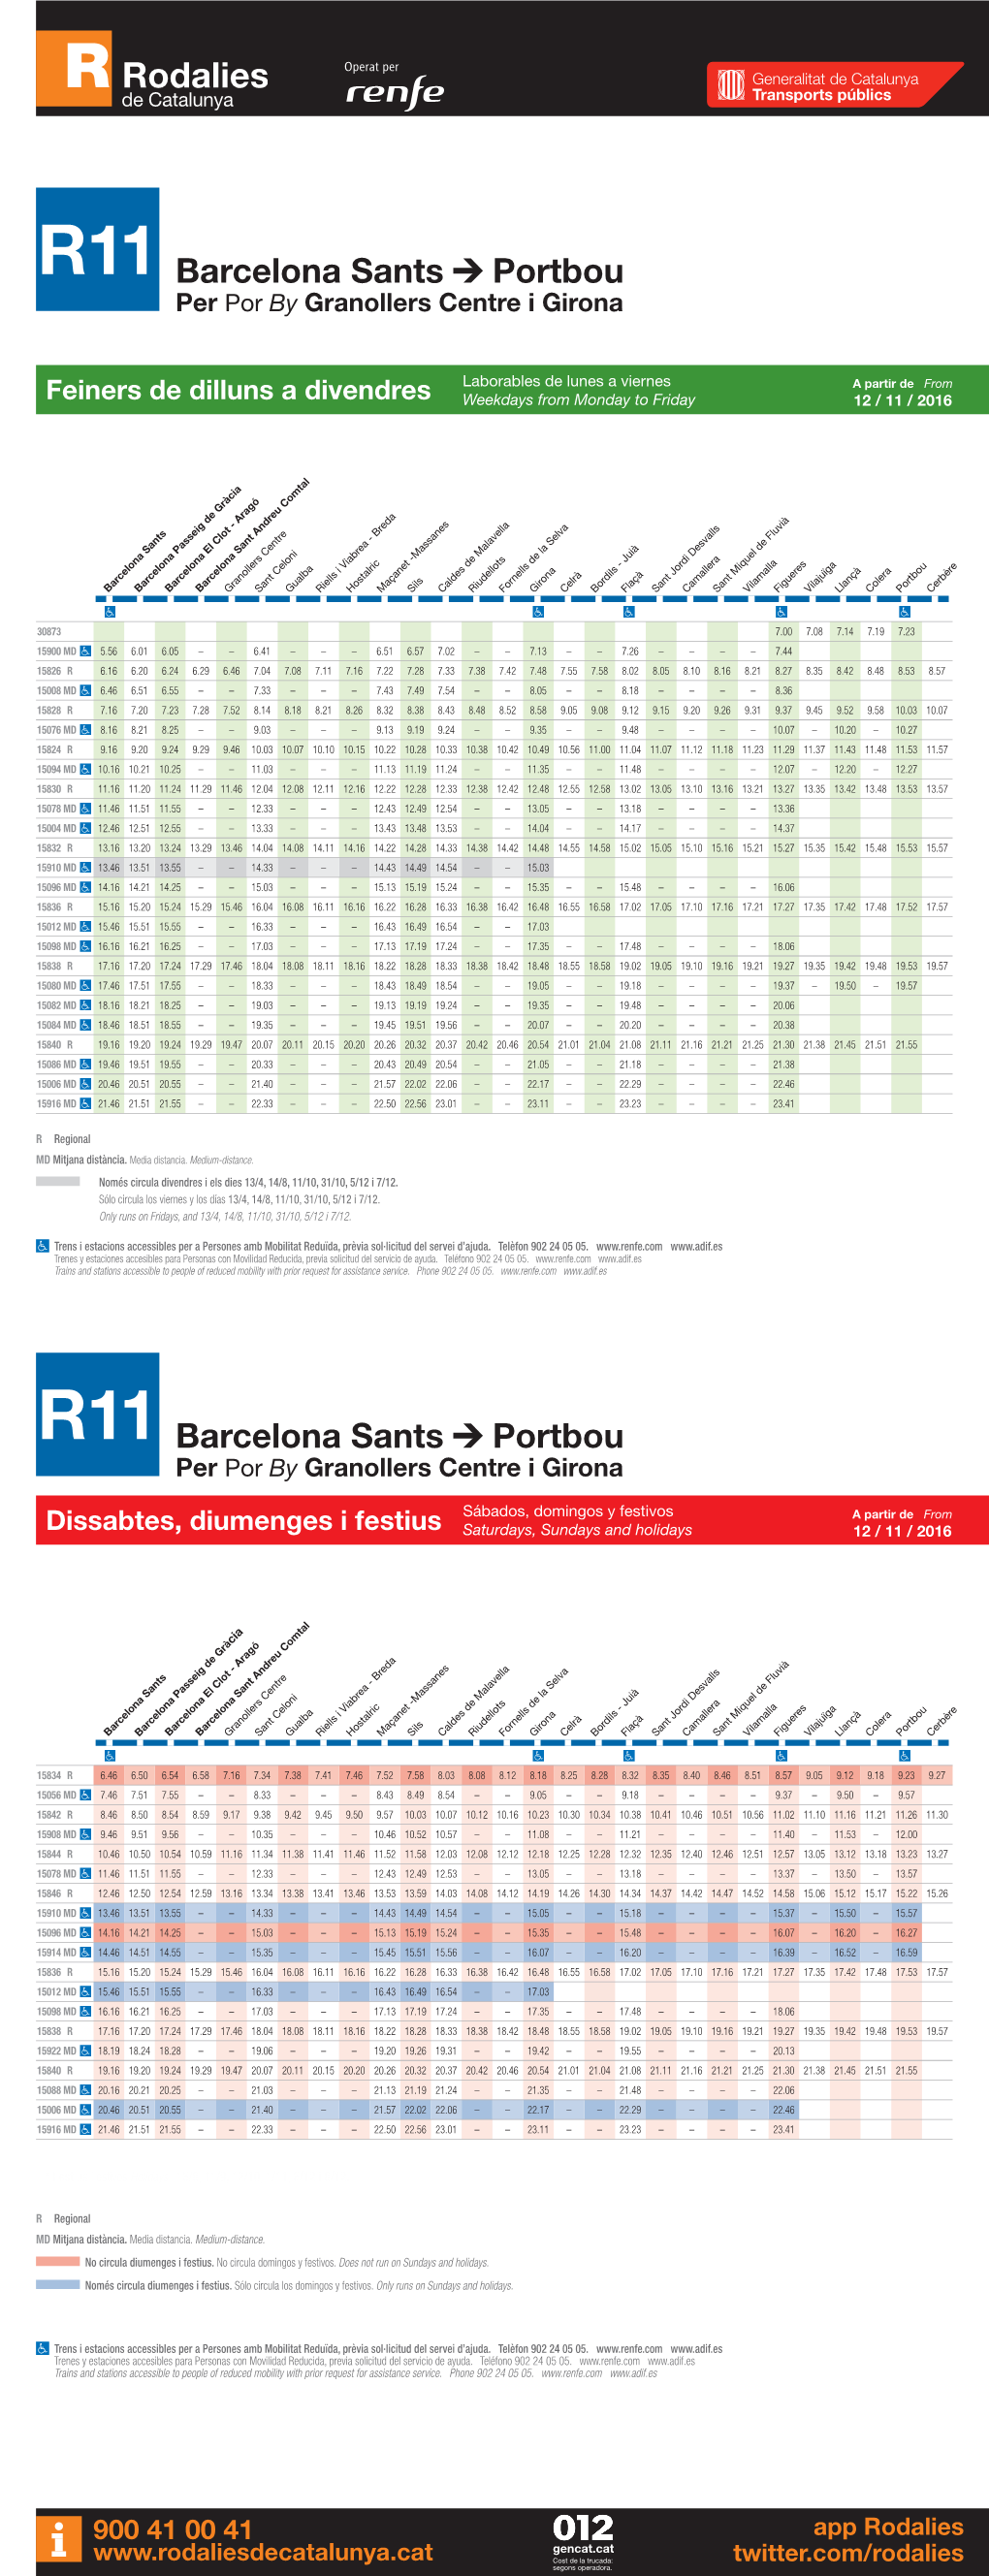 R11 Barcelona Sants Portbou Per Por by Granollers Centre I Girona